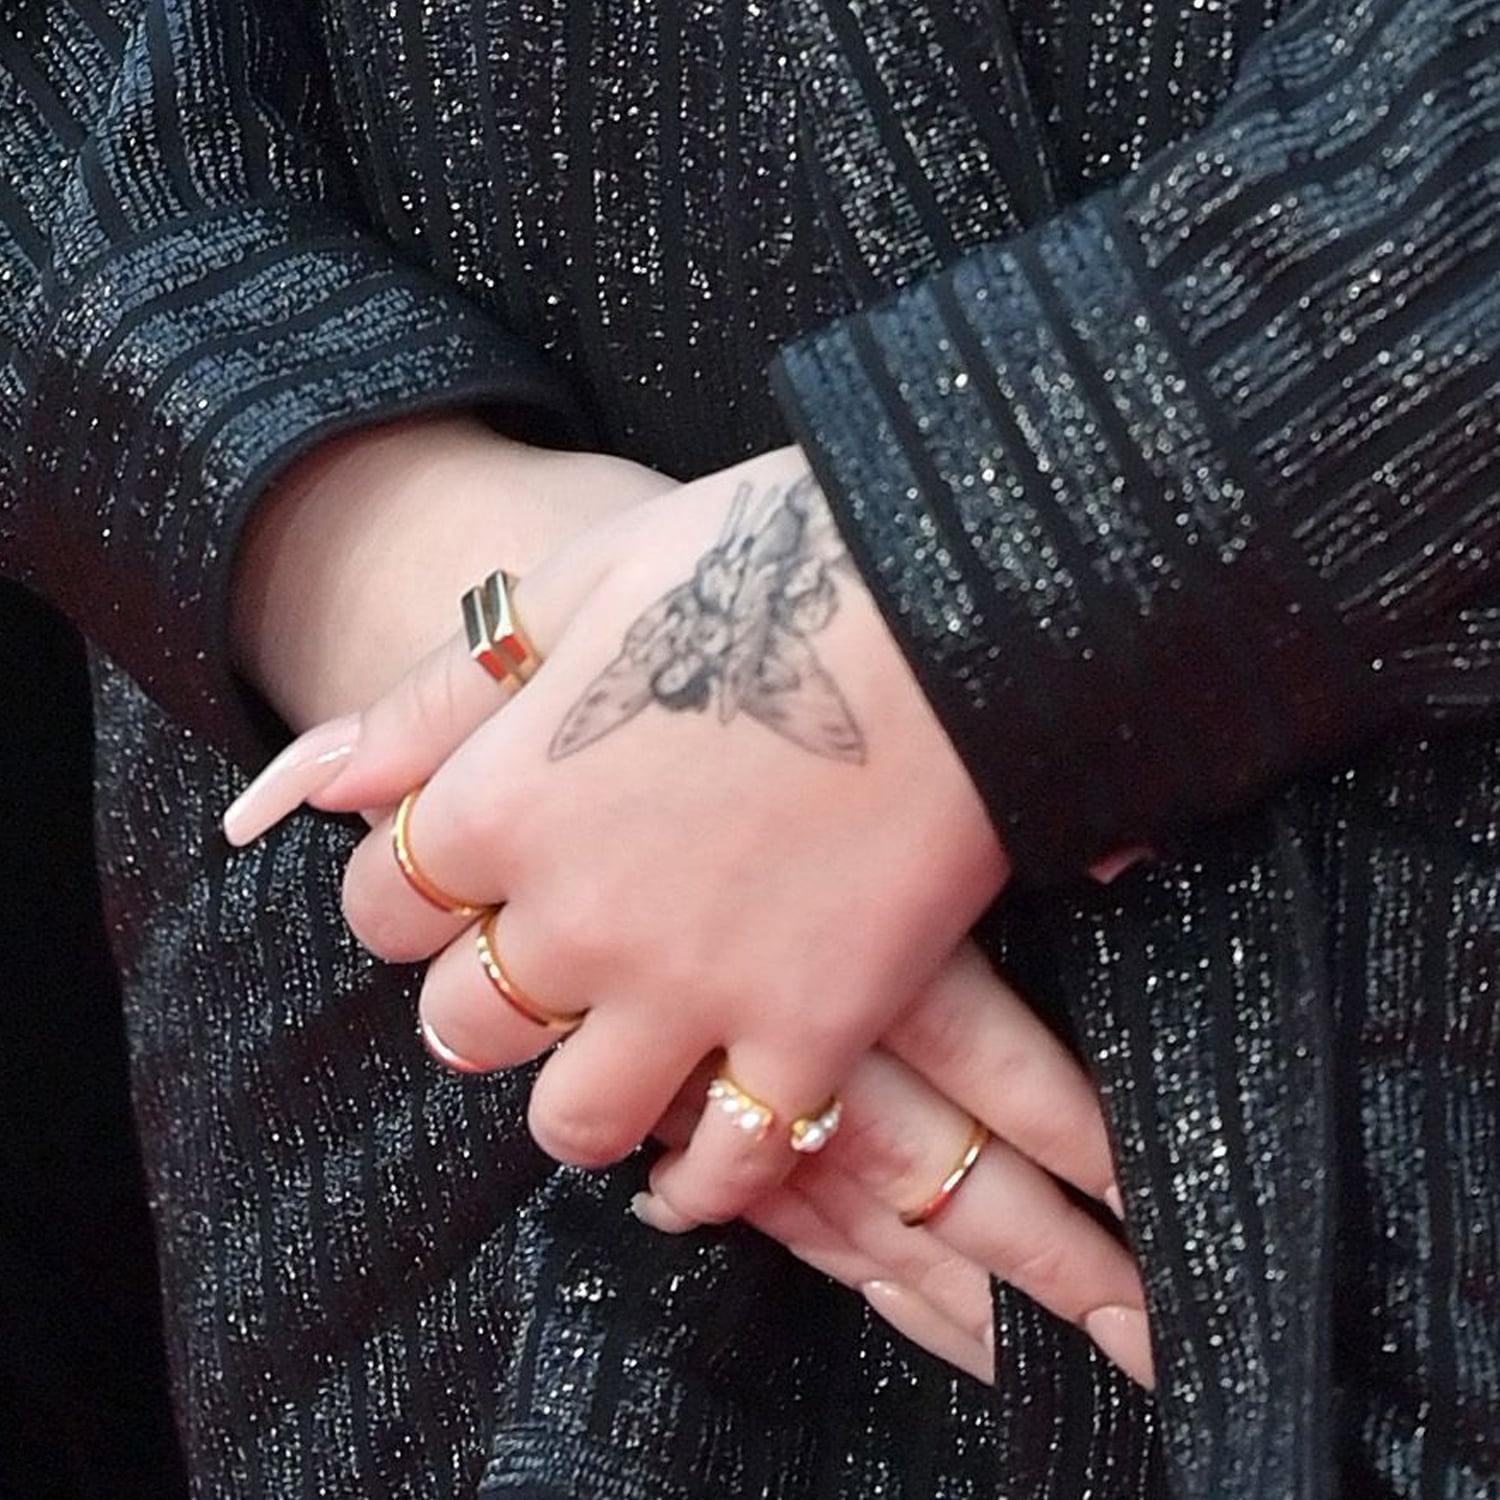 Nailite - Why did singer Billie Eilish start wearing acrylic nails? 